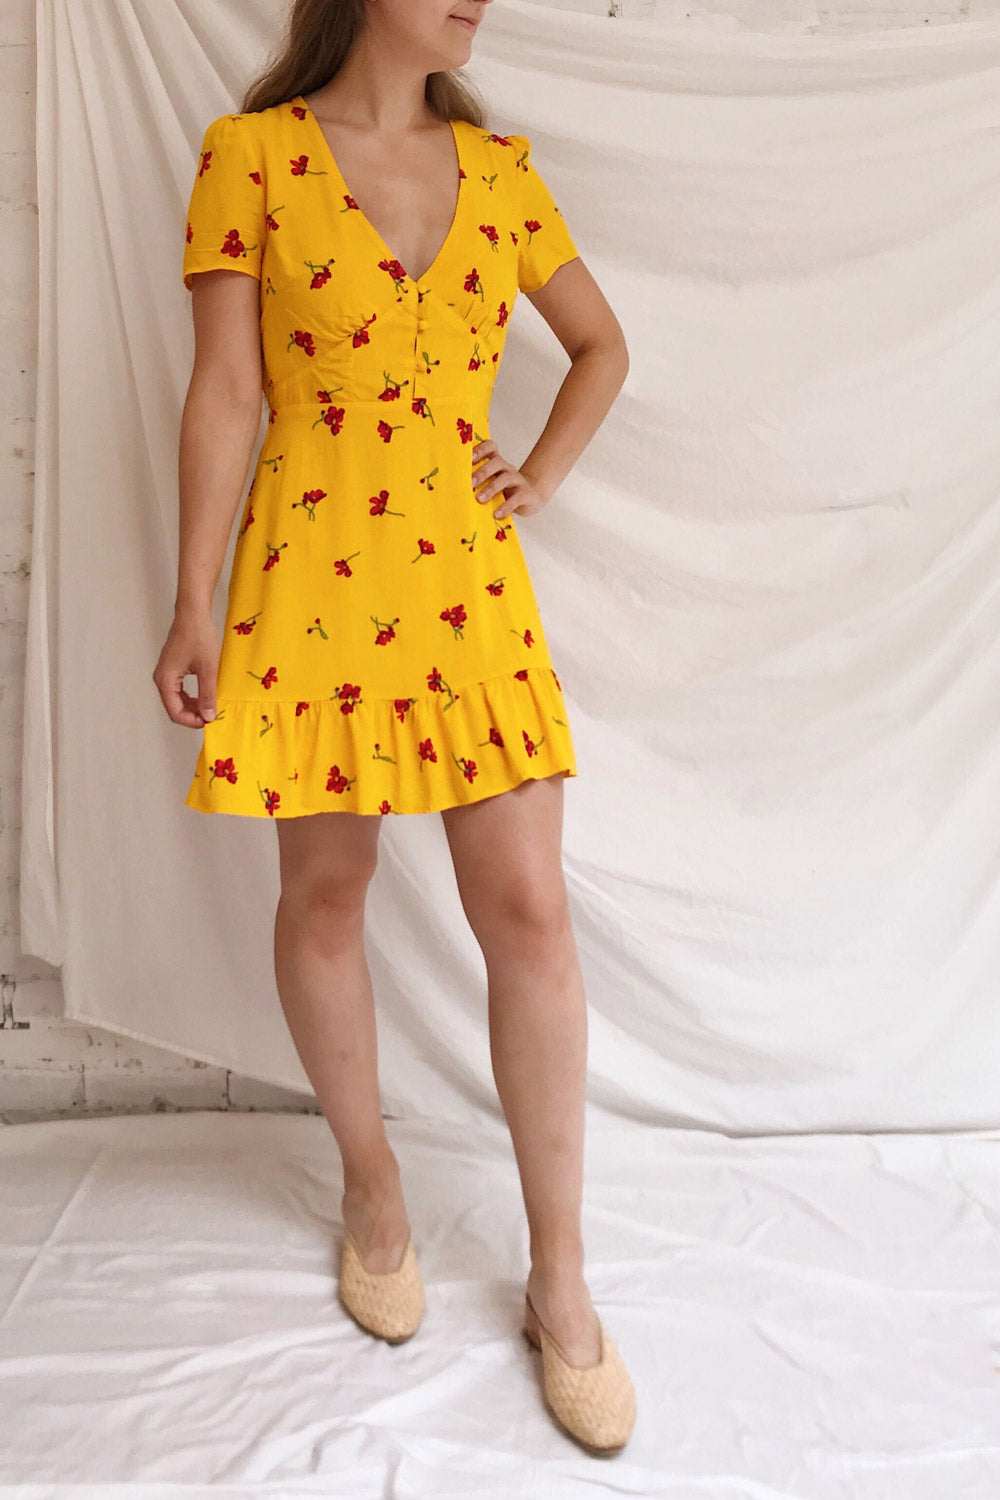 Citlali Yellow Floral Short Dress | Boutique 1861 model look